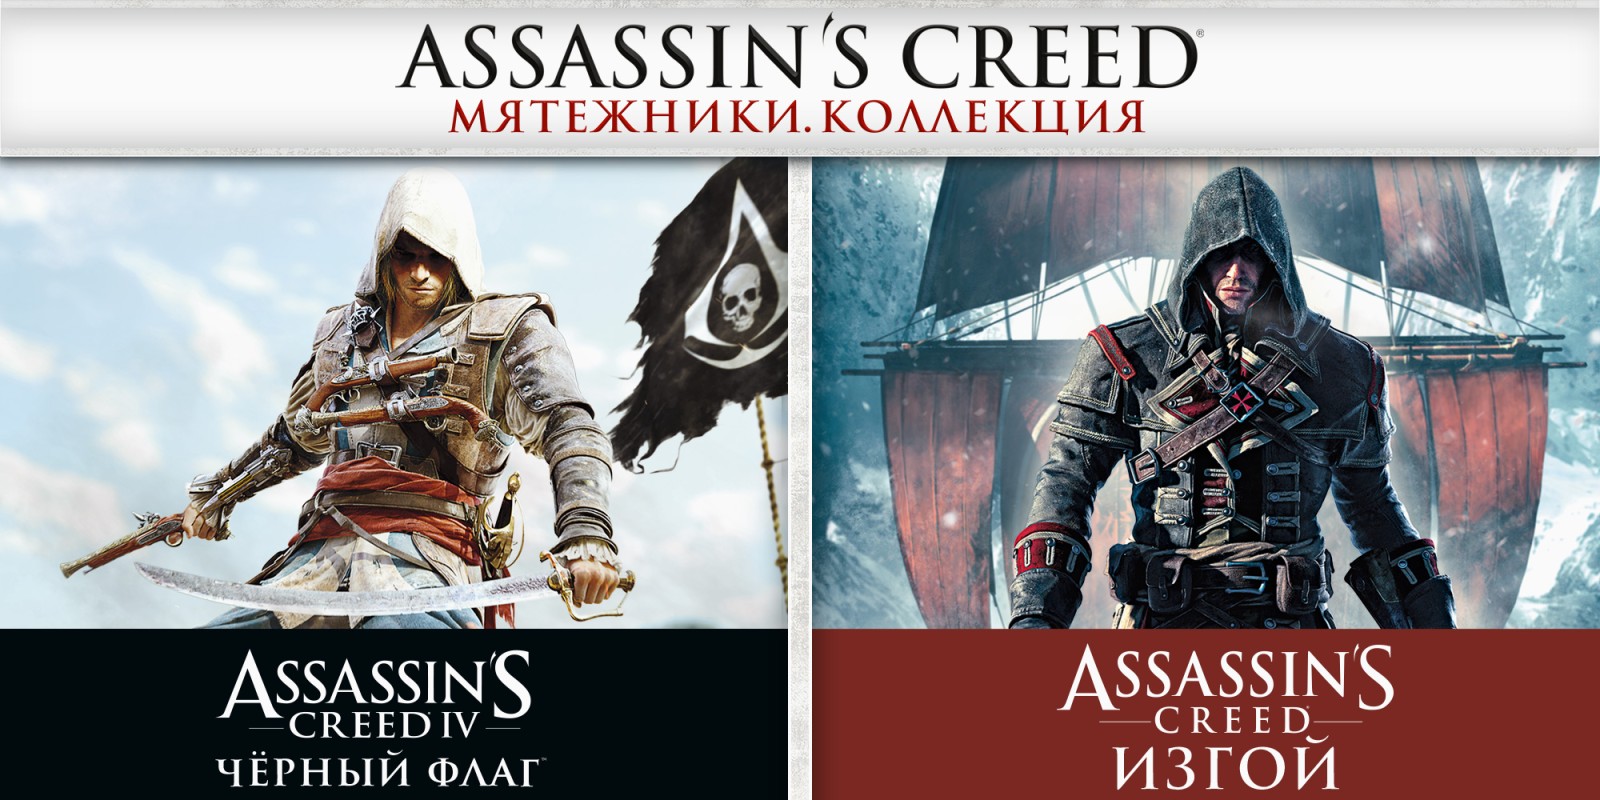 Assassin's Creed® Мятежники. Коллекция